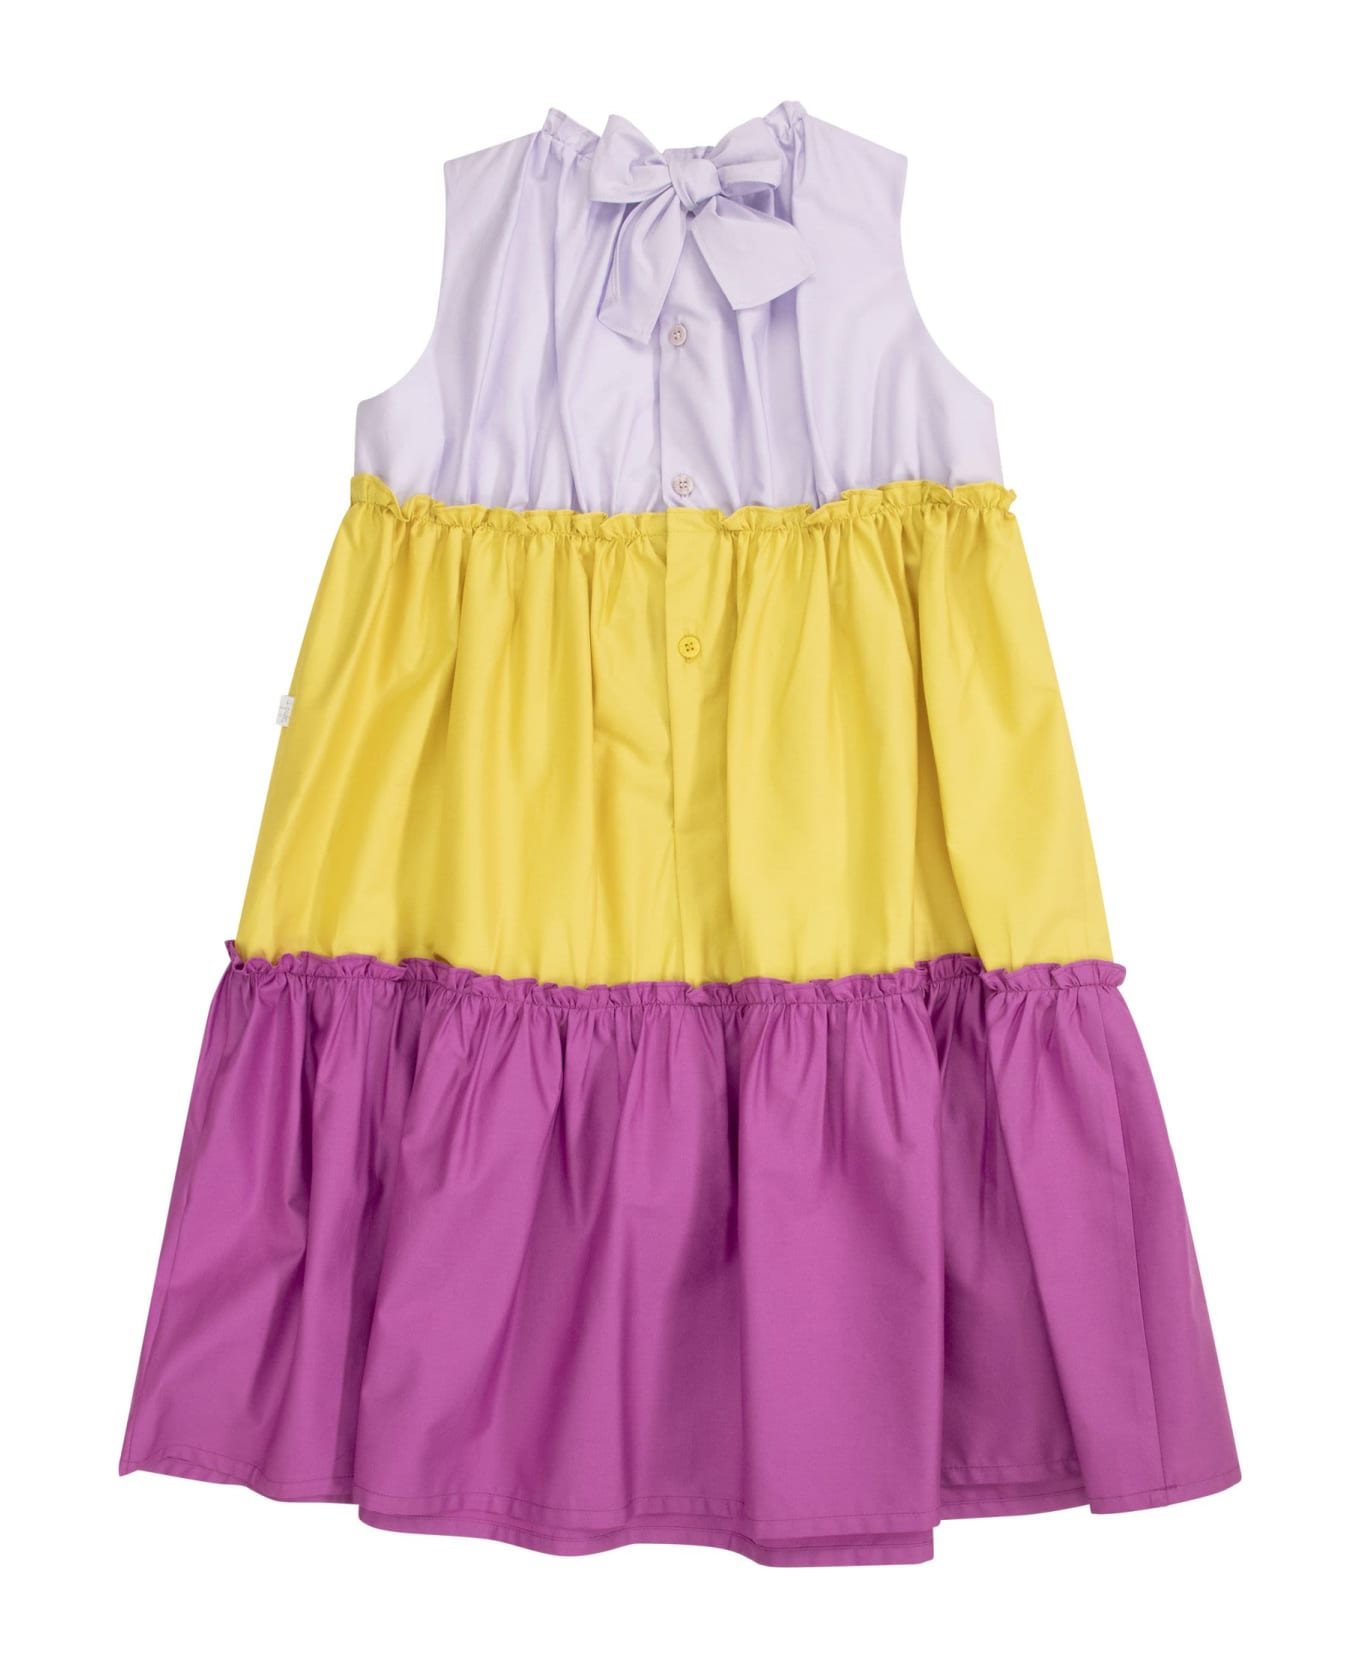 Il Gufo Sleeveless Dress With Ruffles - Lilac/yellow